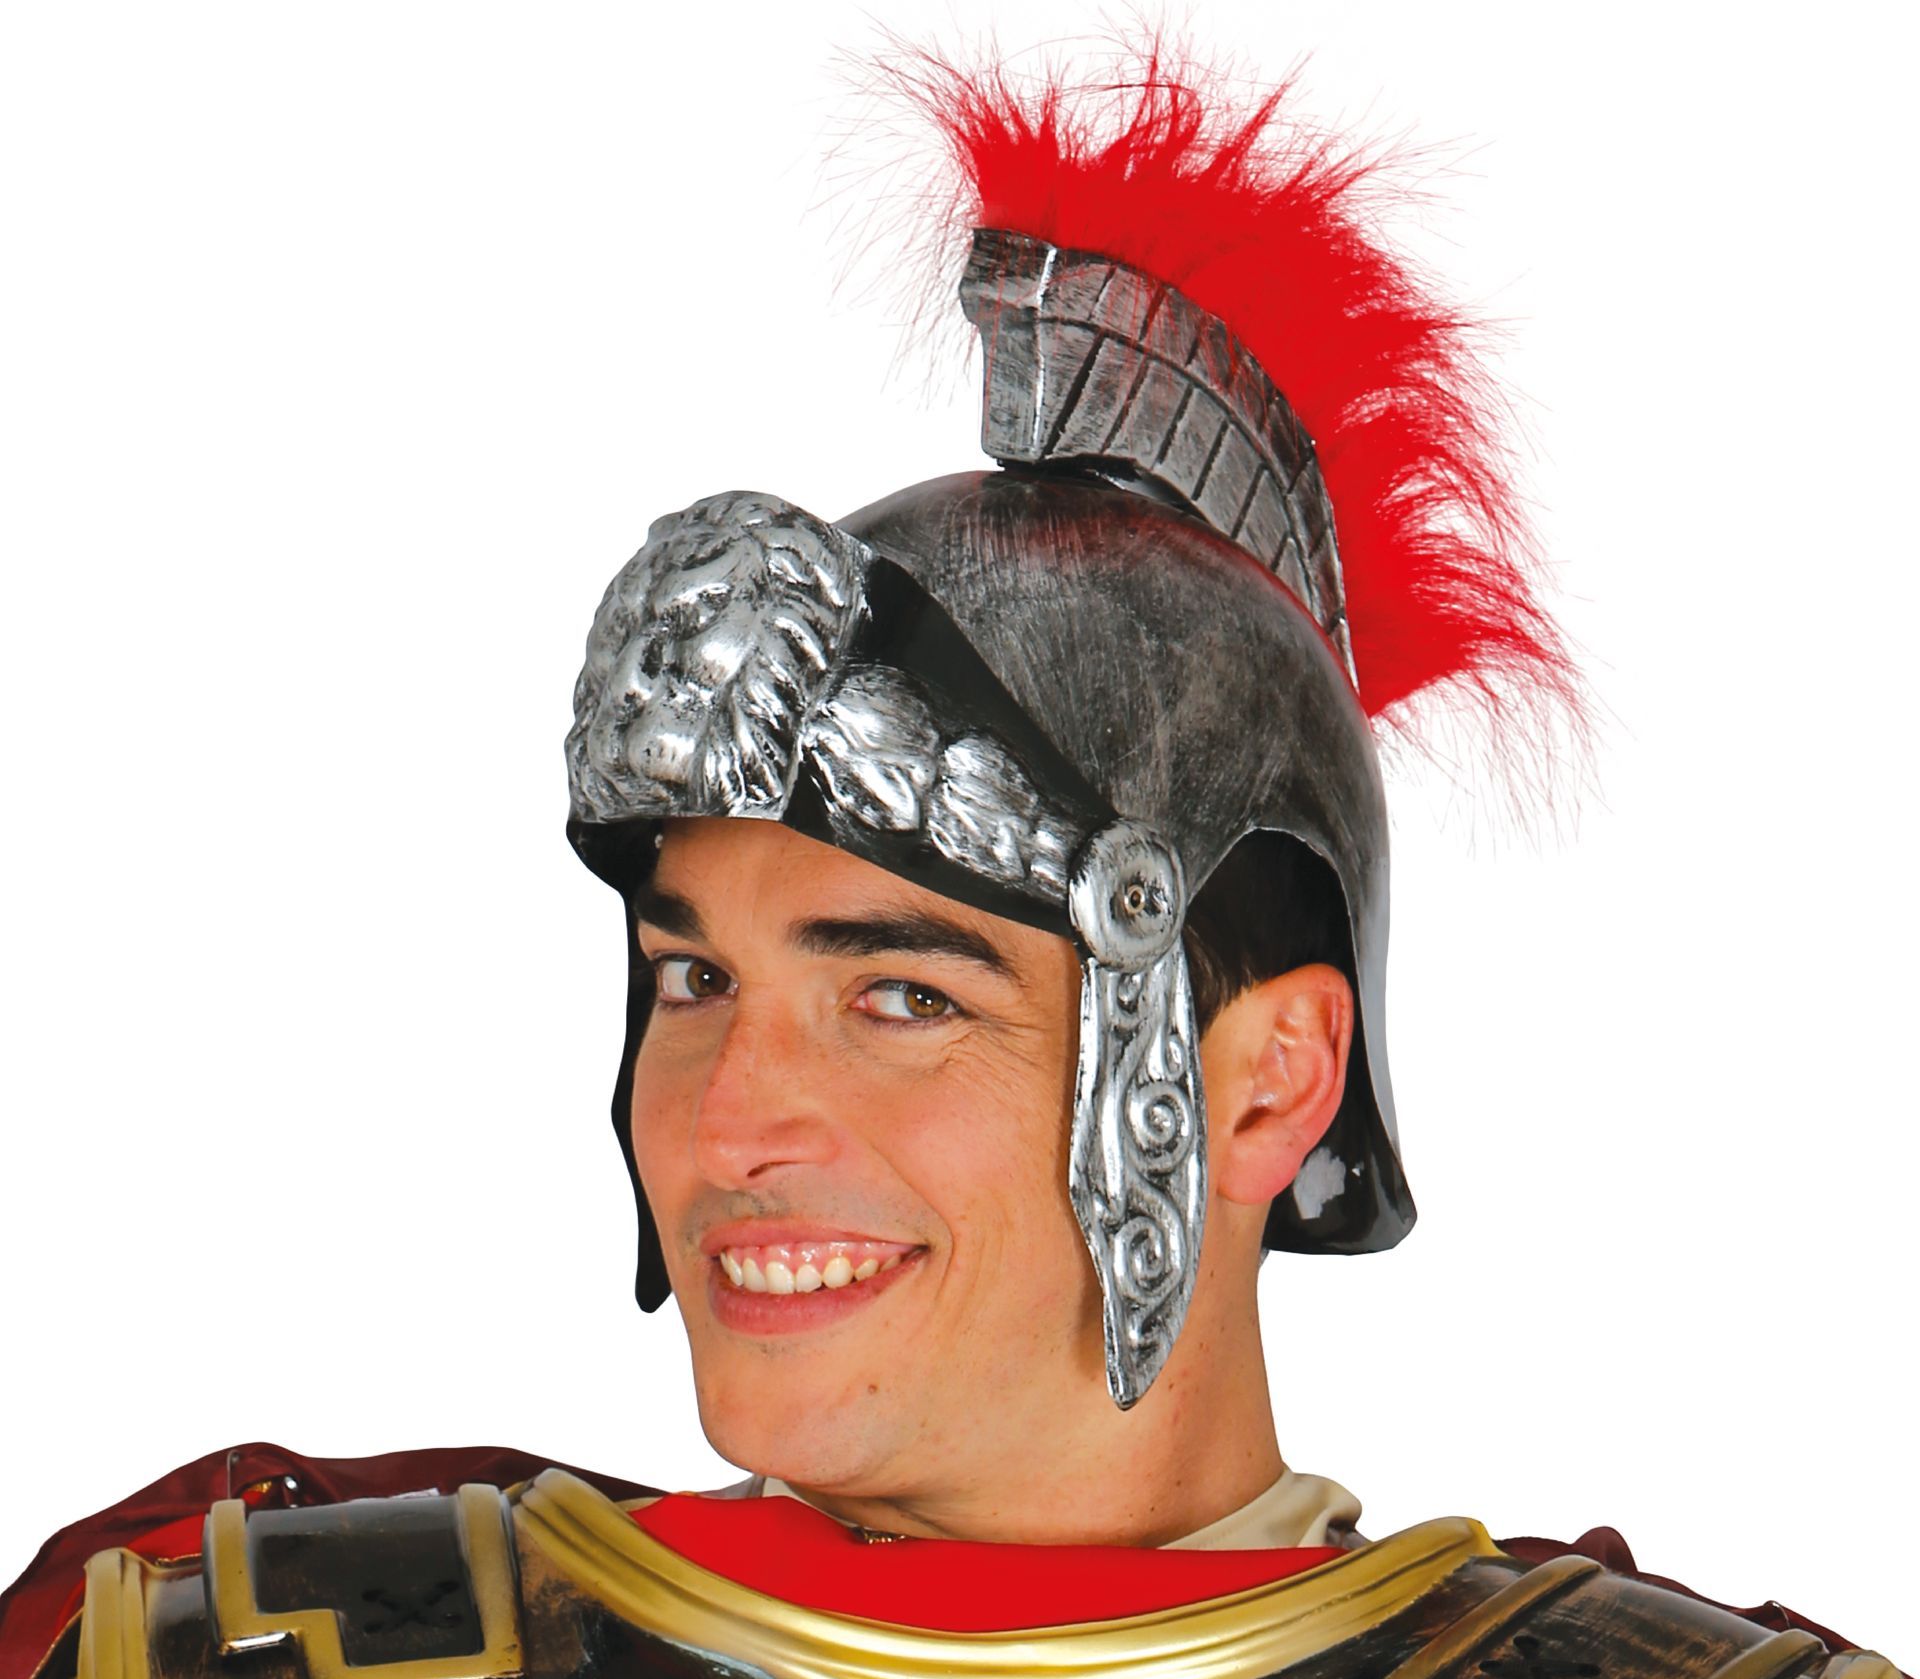 Gladiator helm met rode pluim